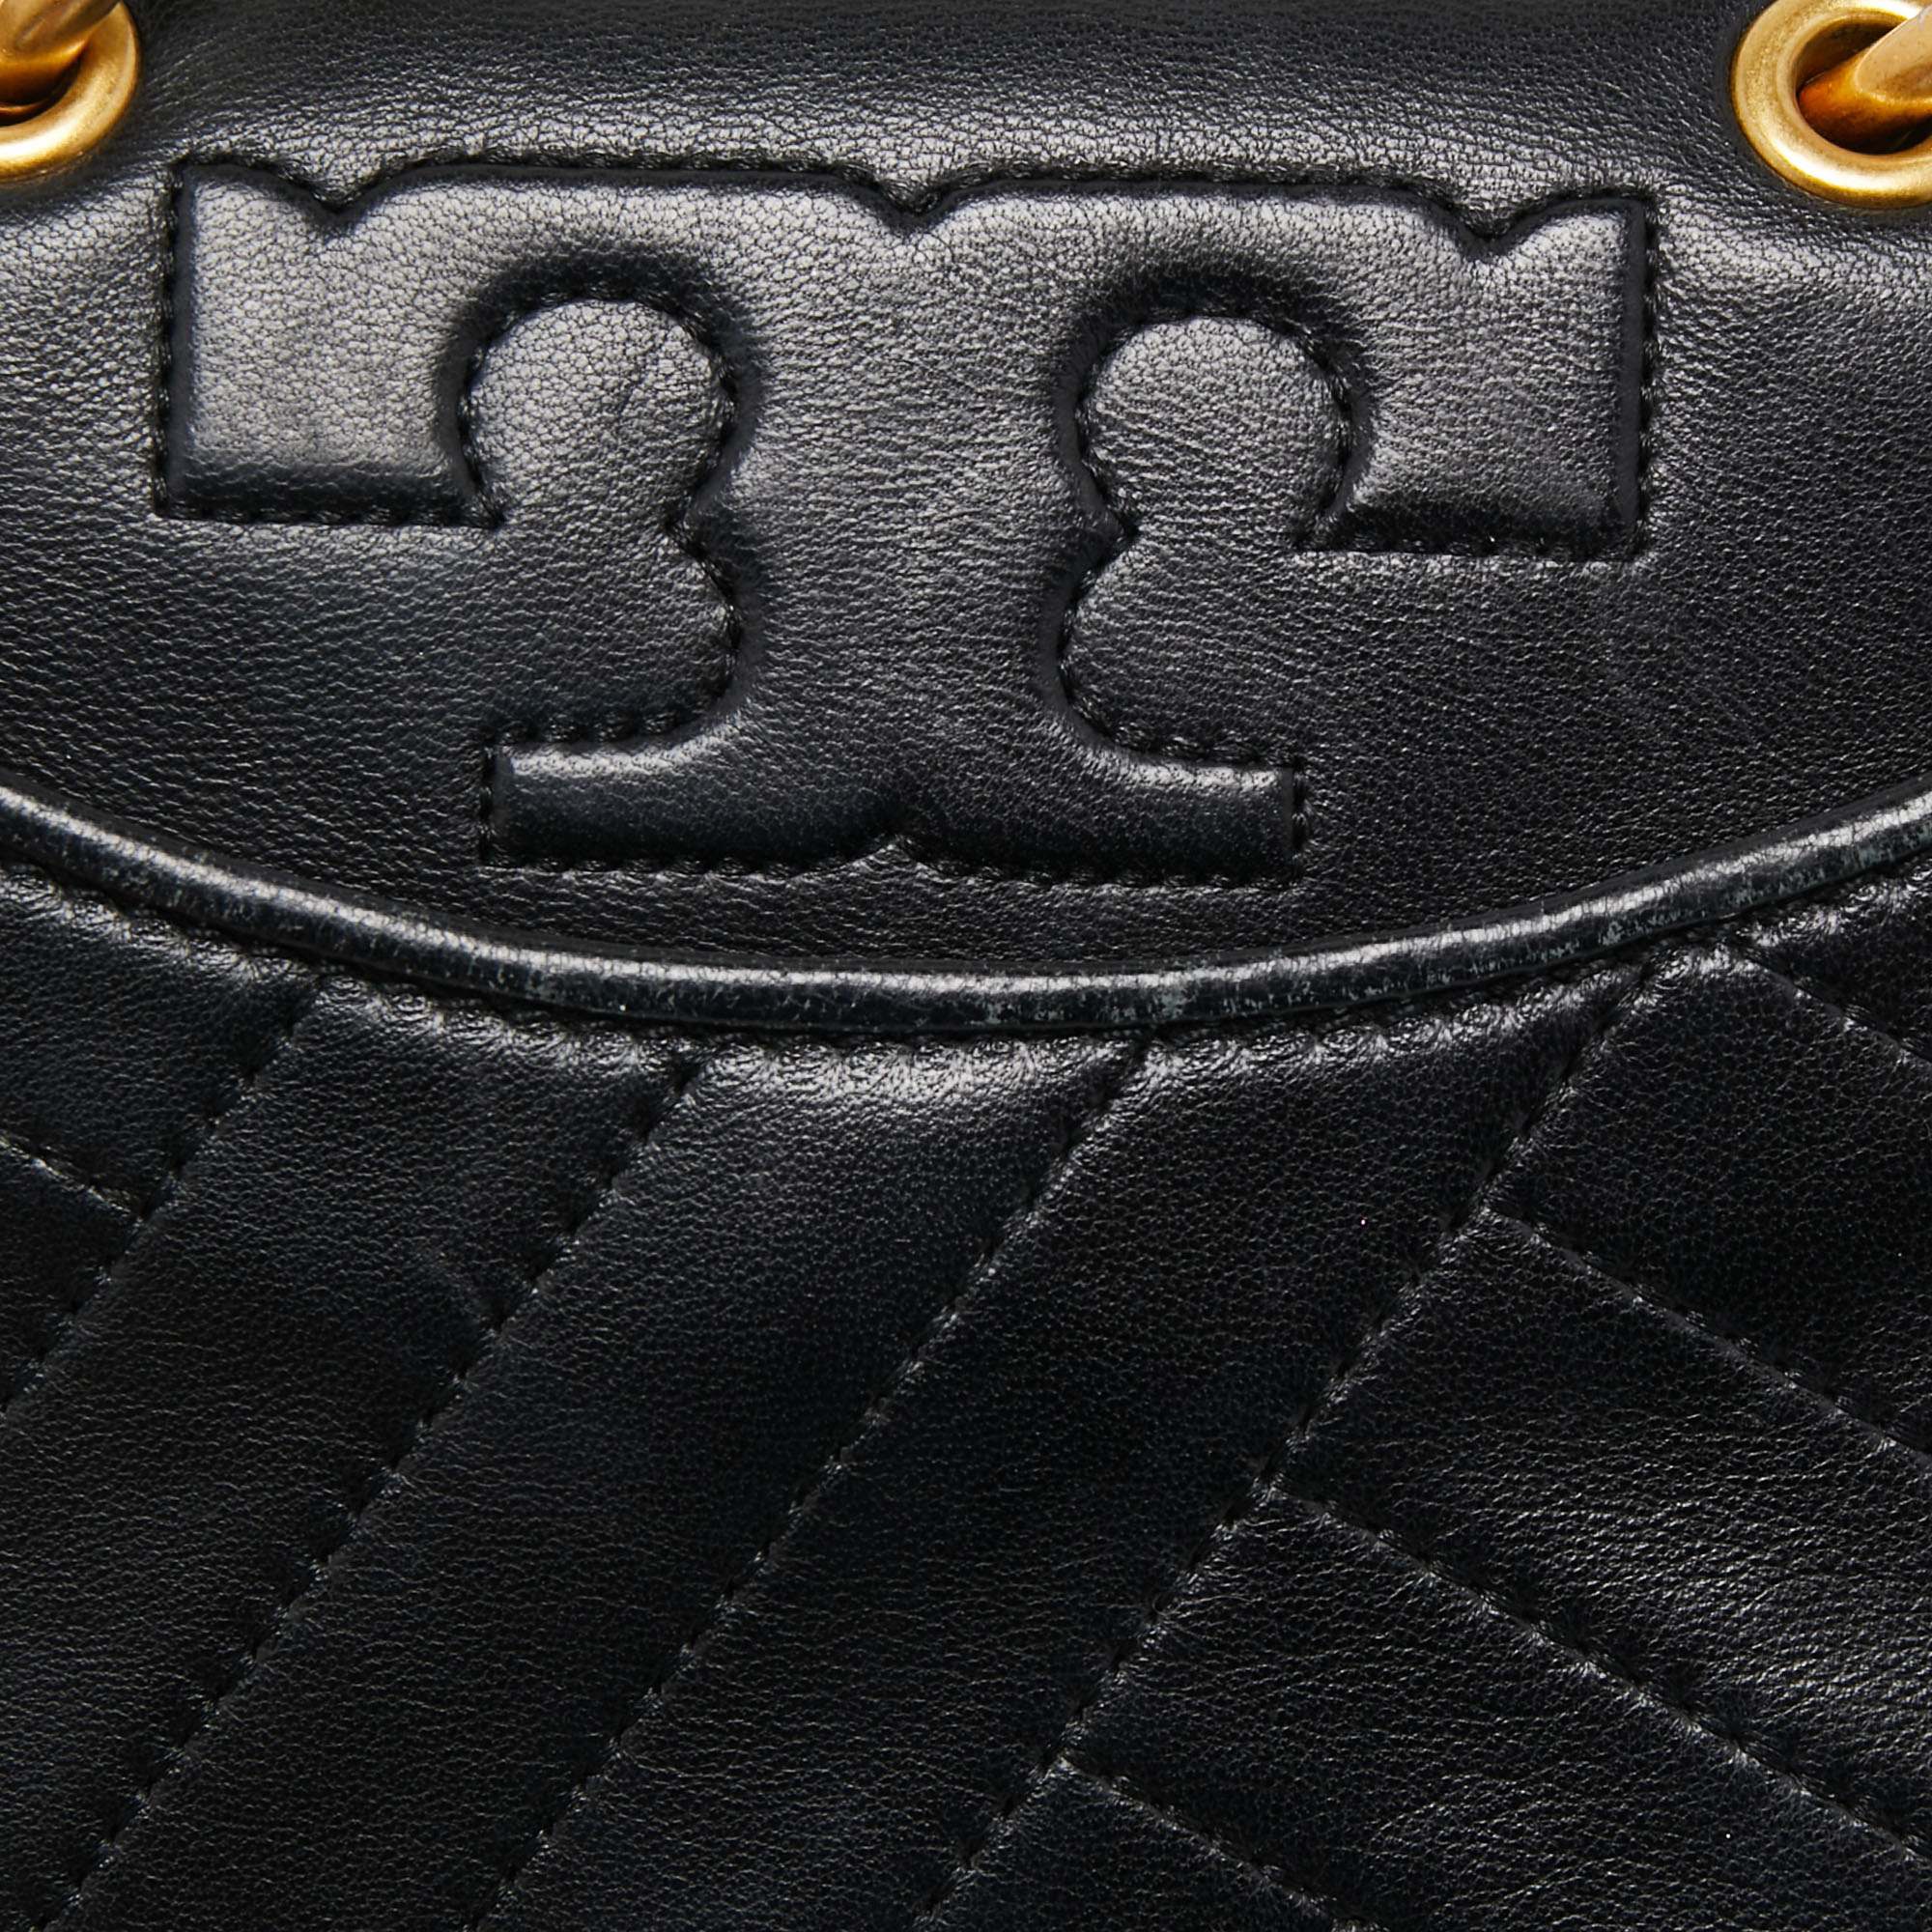 Tory Burch Black Leather Mini Alexa Crossbody Bag